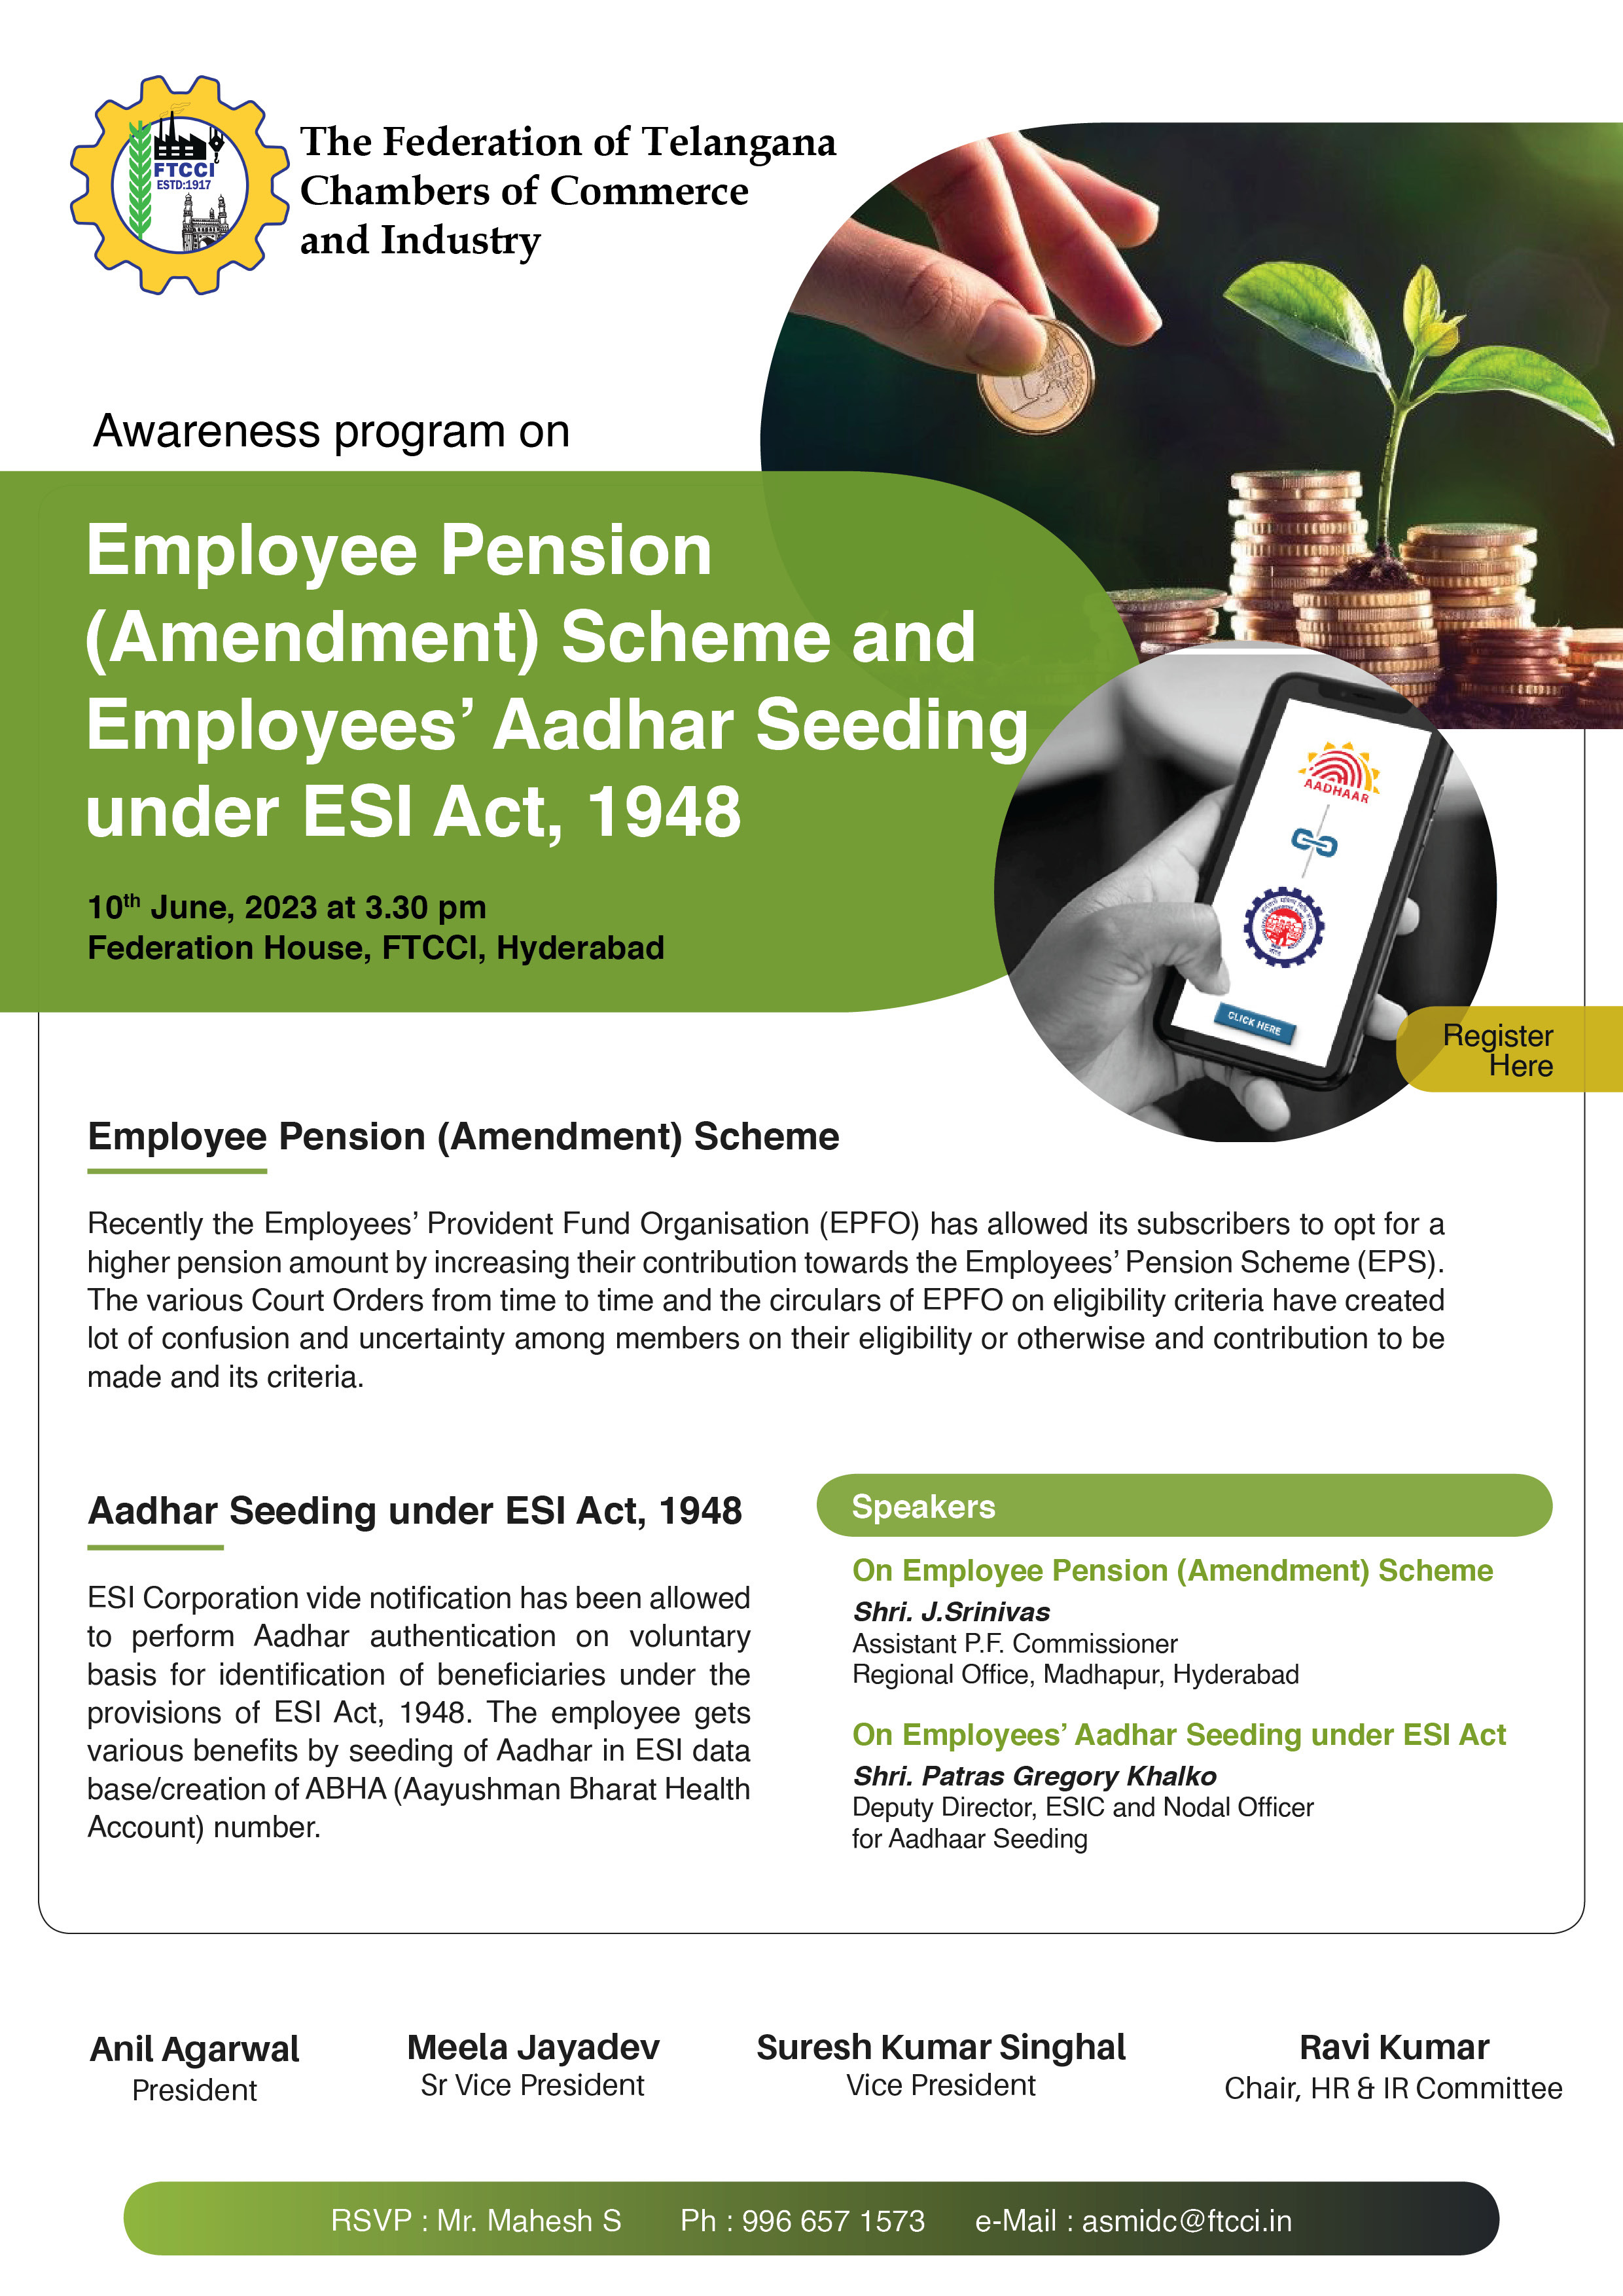 Awareness program on Employee Pension (Amendment) Scheme and Employees’ Aadhar Seeding under ESI Act, 1948